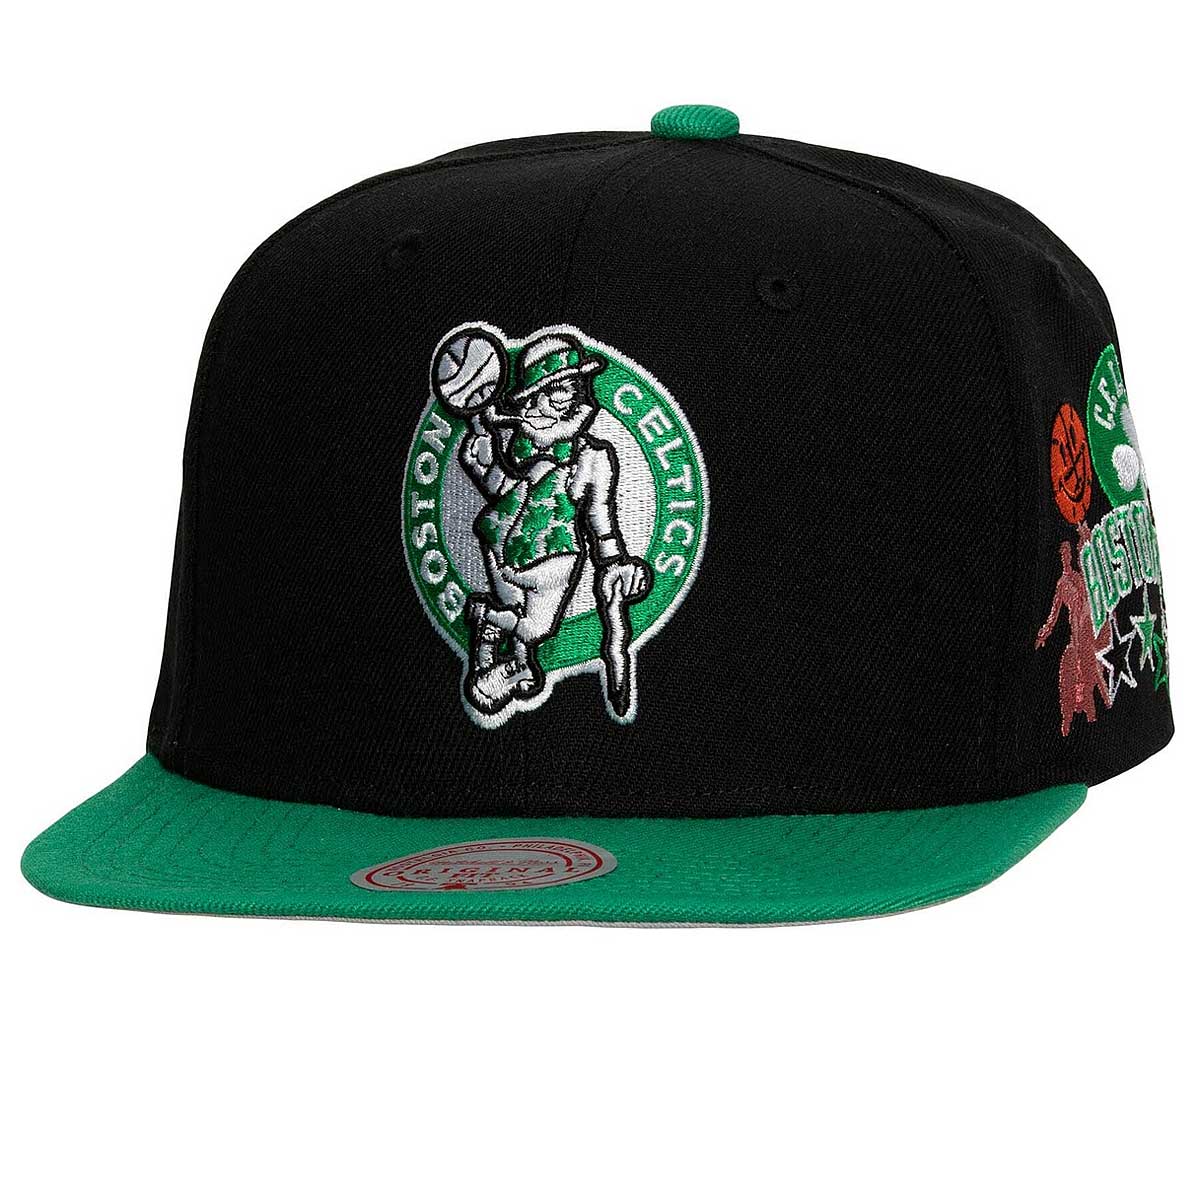 Celtics Hardwood Classics NBA hat